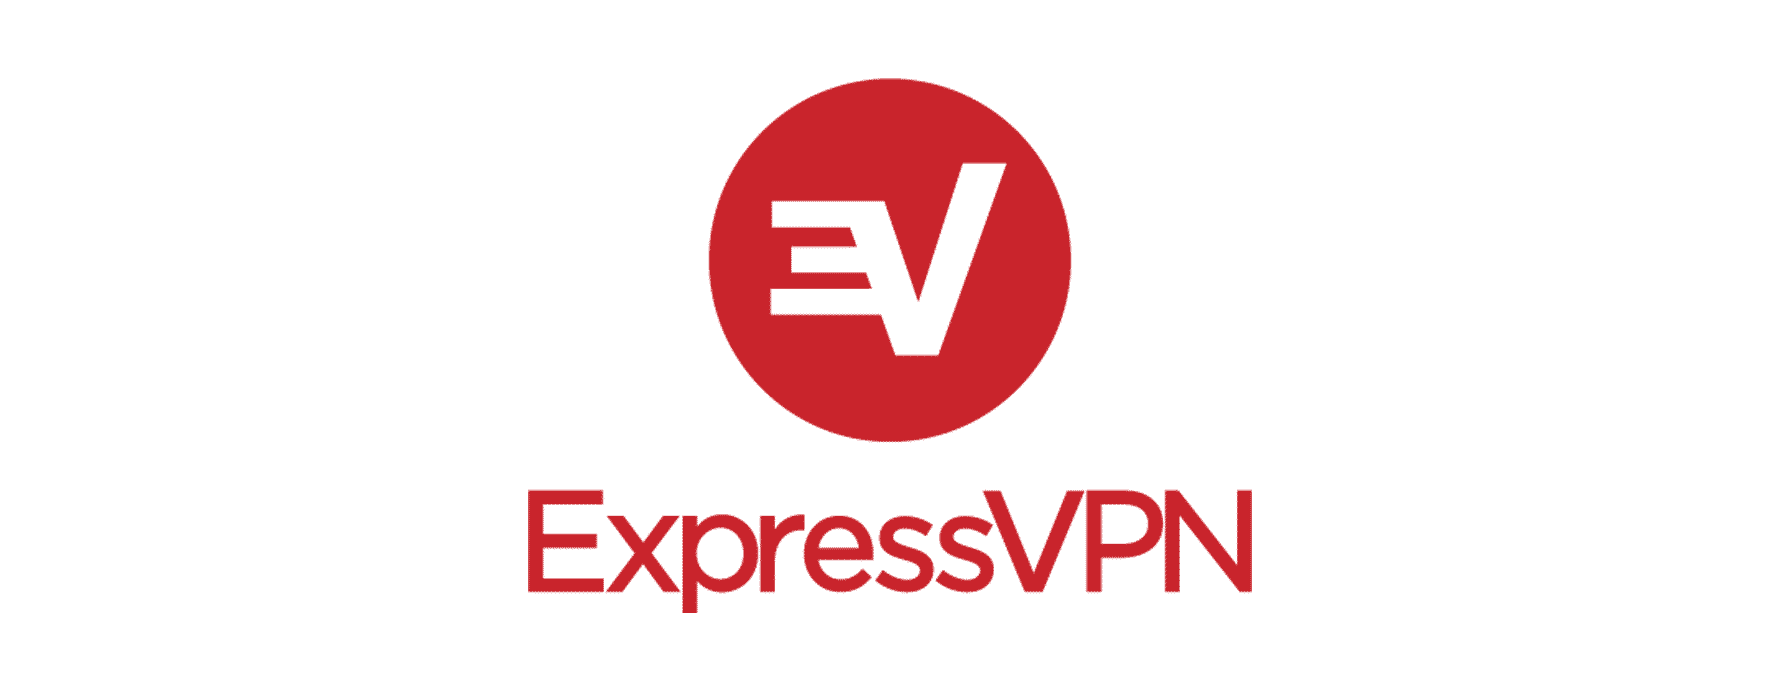 VPN Ekspres